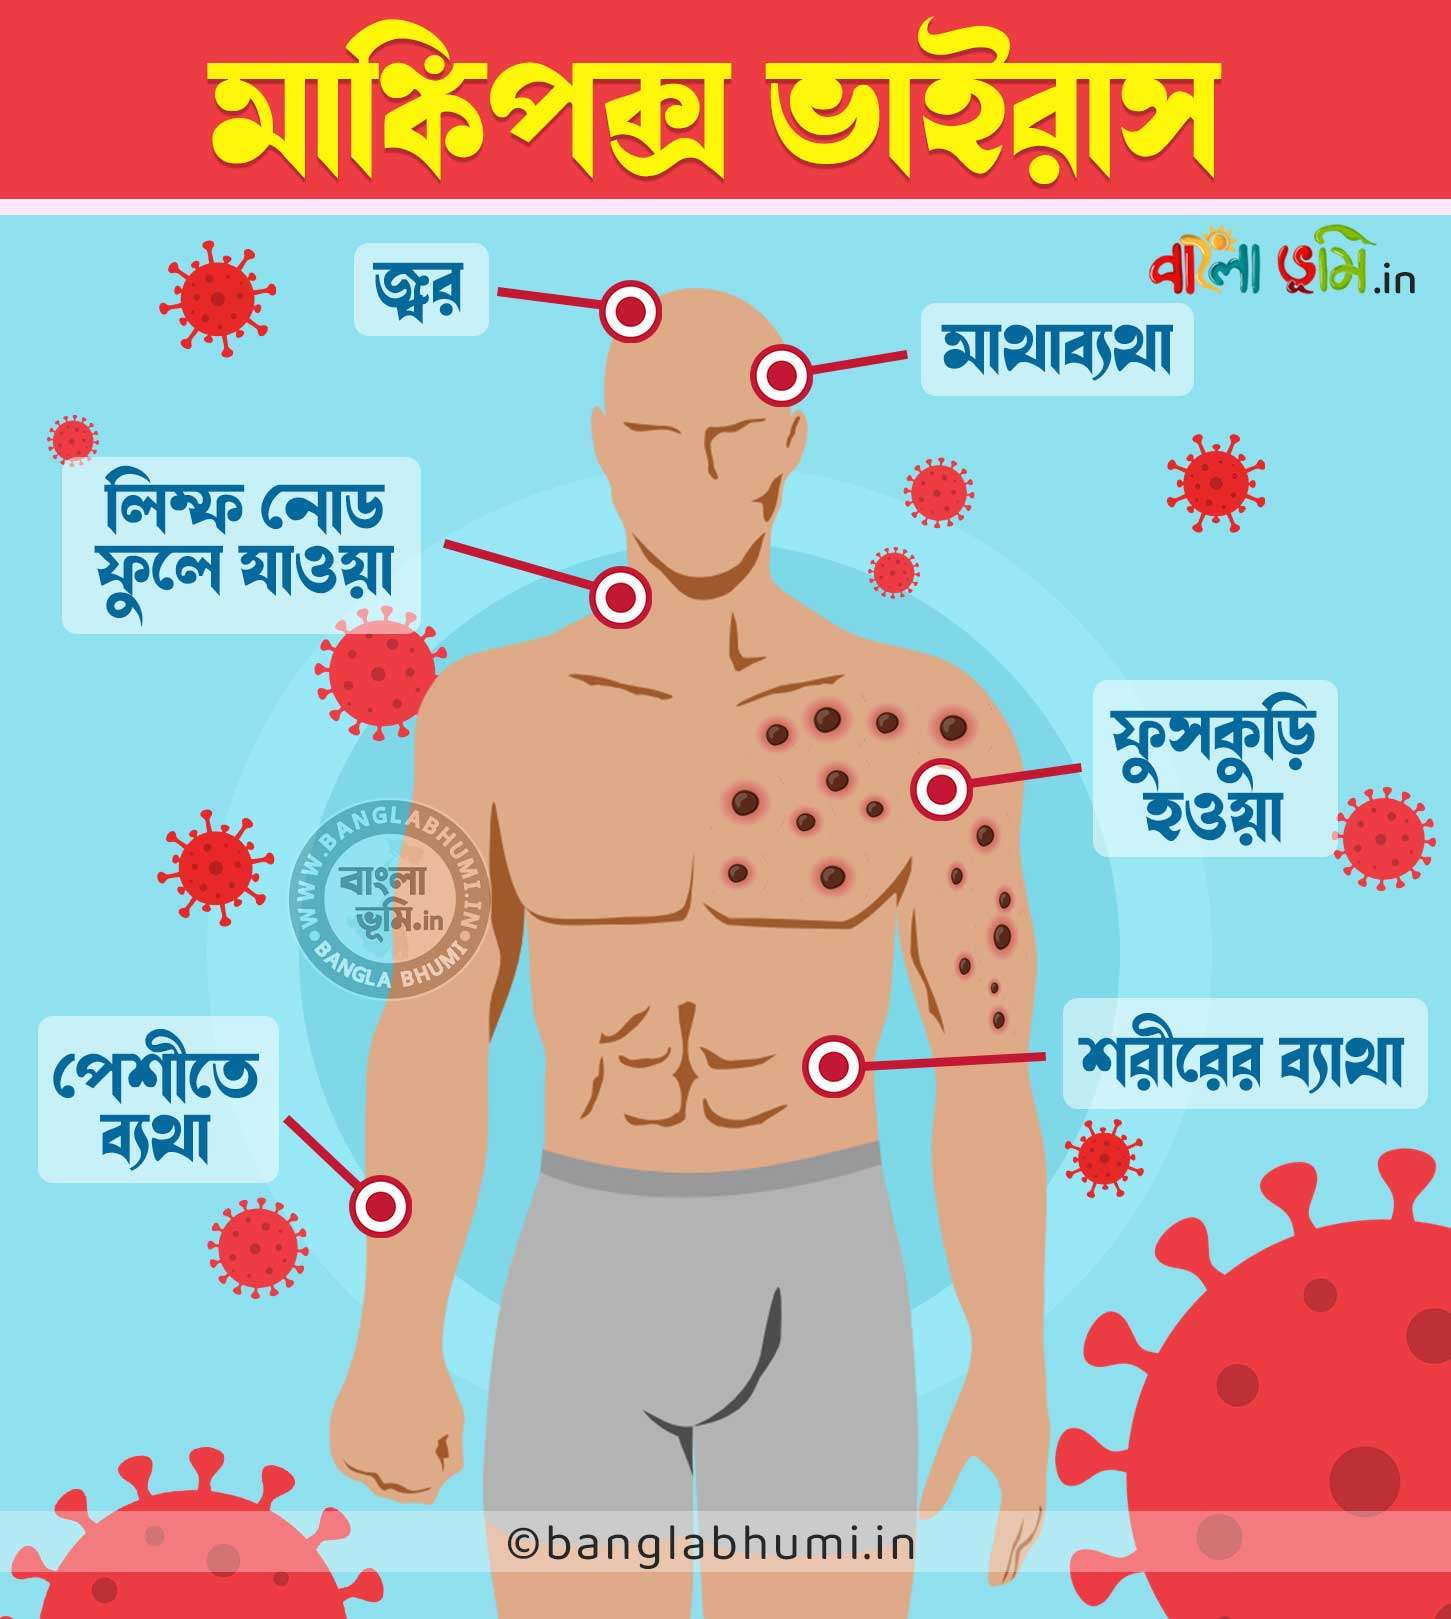 Symptoms of monkeypox in bengali - মাঙ্কি পক্সের লক্ষণ